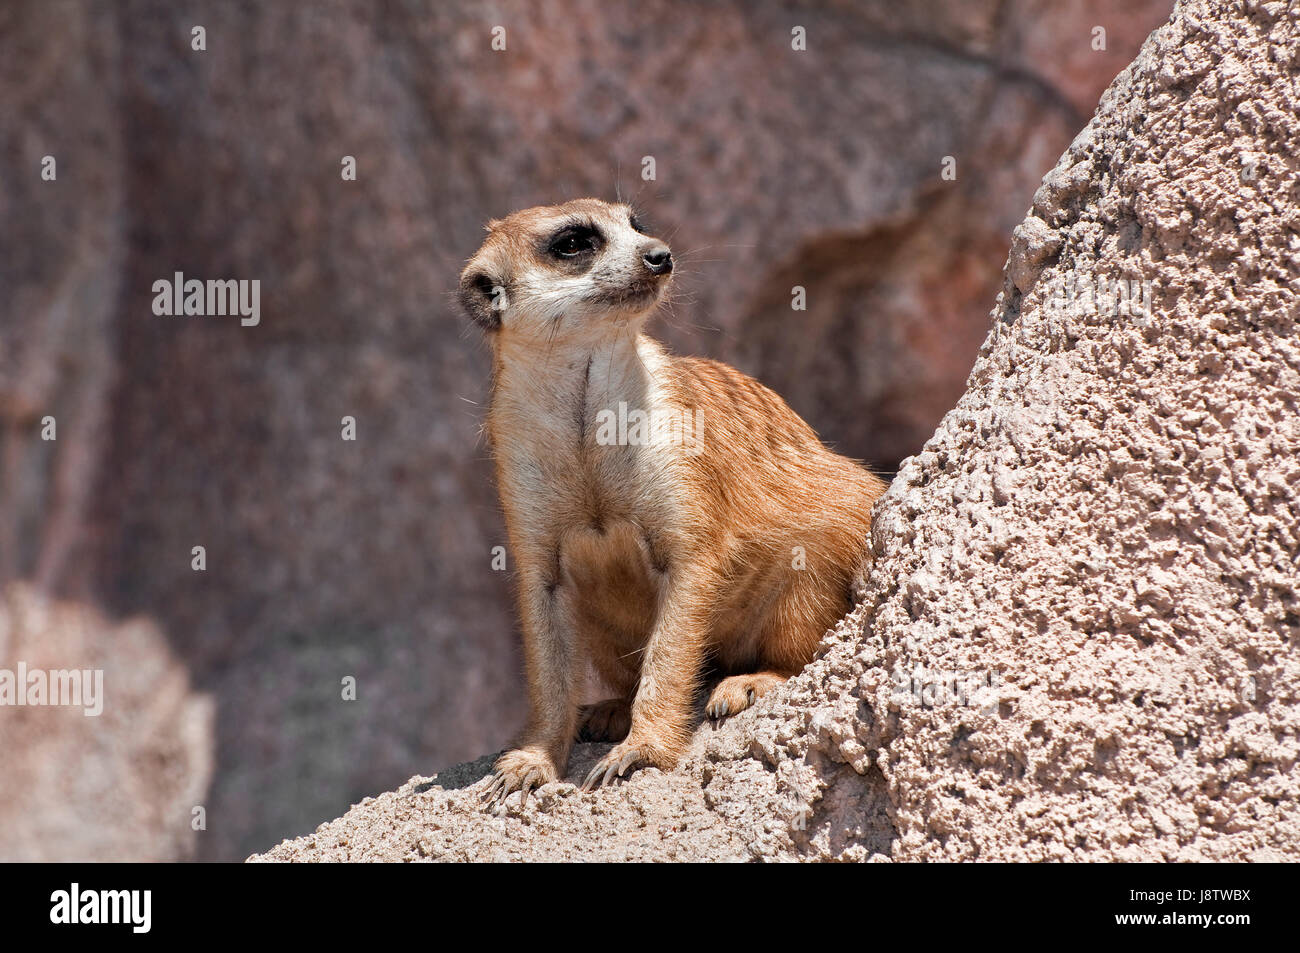 Animale mammifero, Wild, pelliccia, fauna selvatica, meerkat, meerkats, deserto deserto, Foto Stock